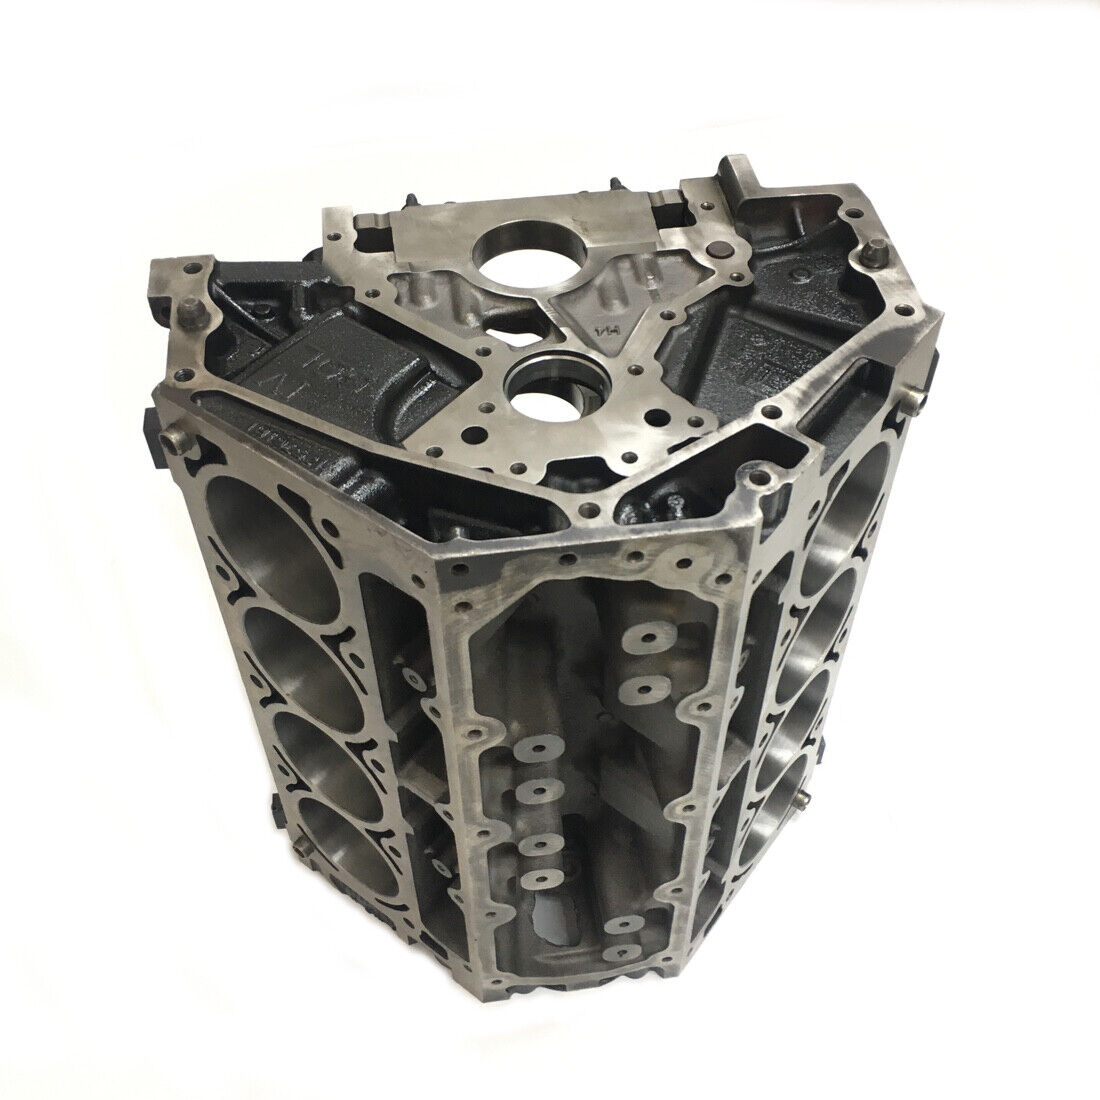 GM Chevrolet LS GEN 4 LY6 L96 6.0L Cast Iron Engine Bare Block STND SIZE READY 